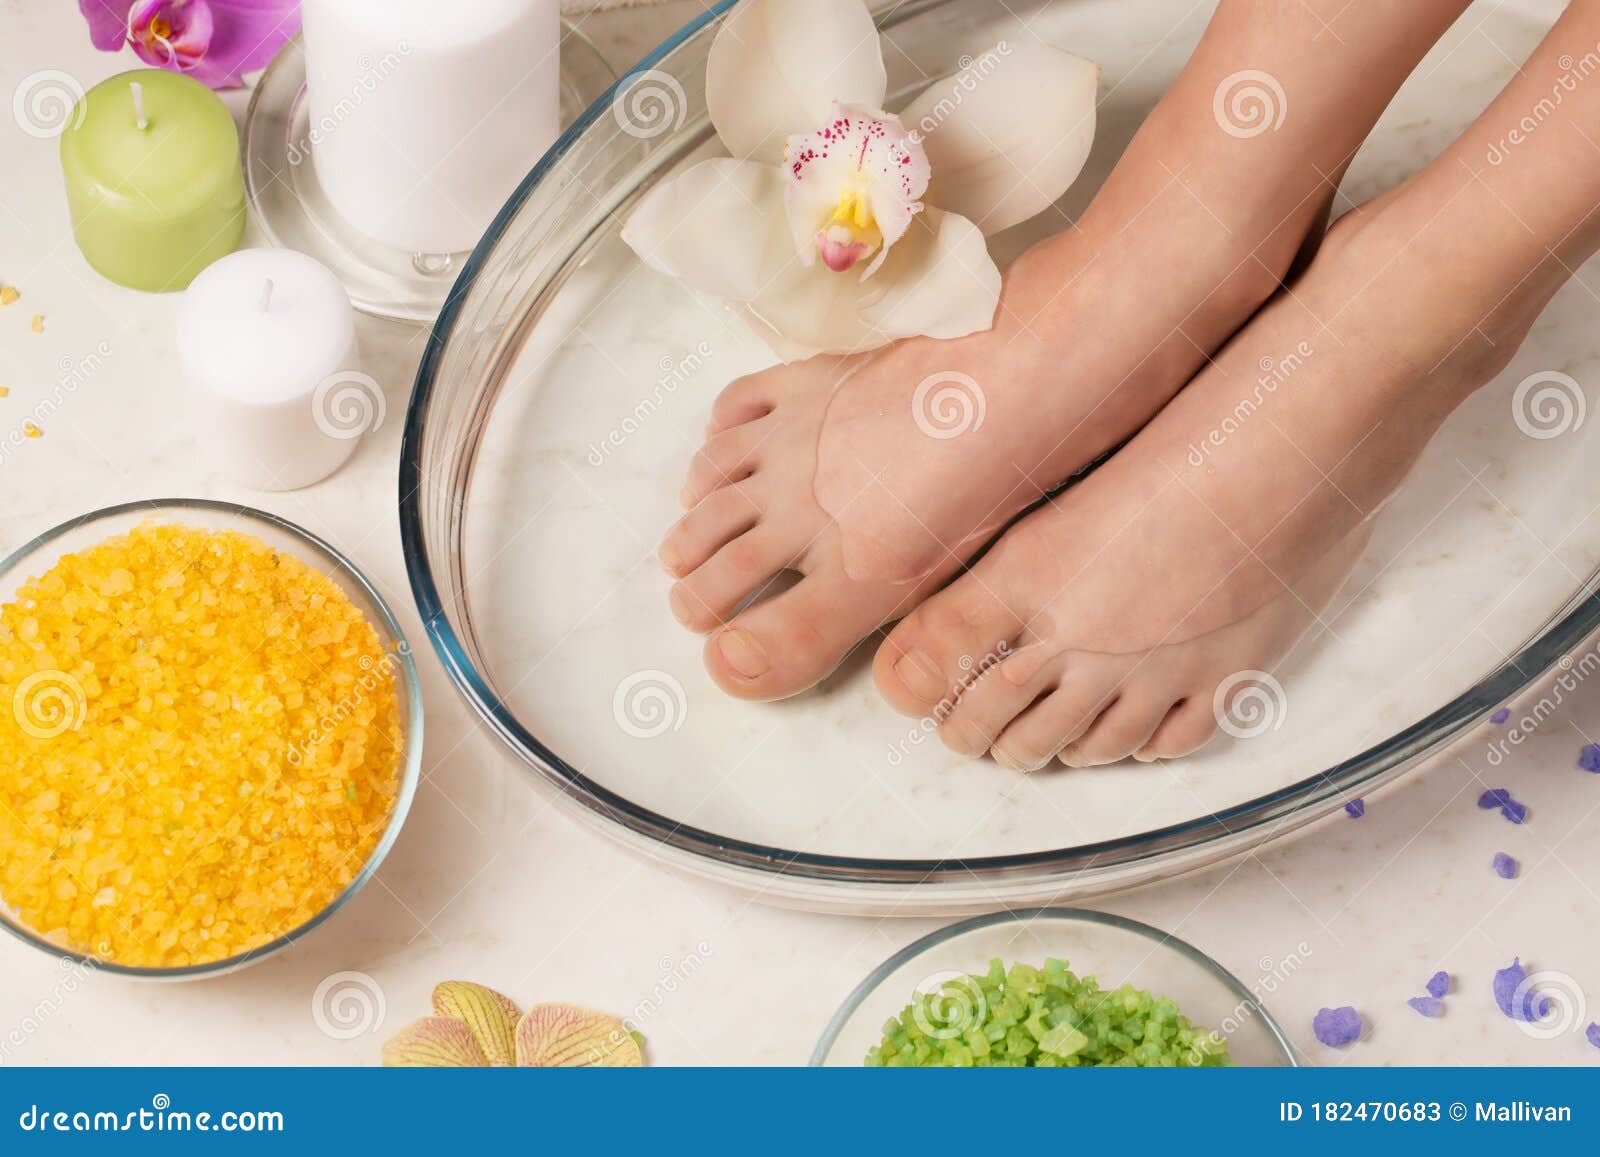 Salt foot bath stock image